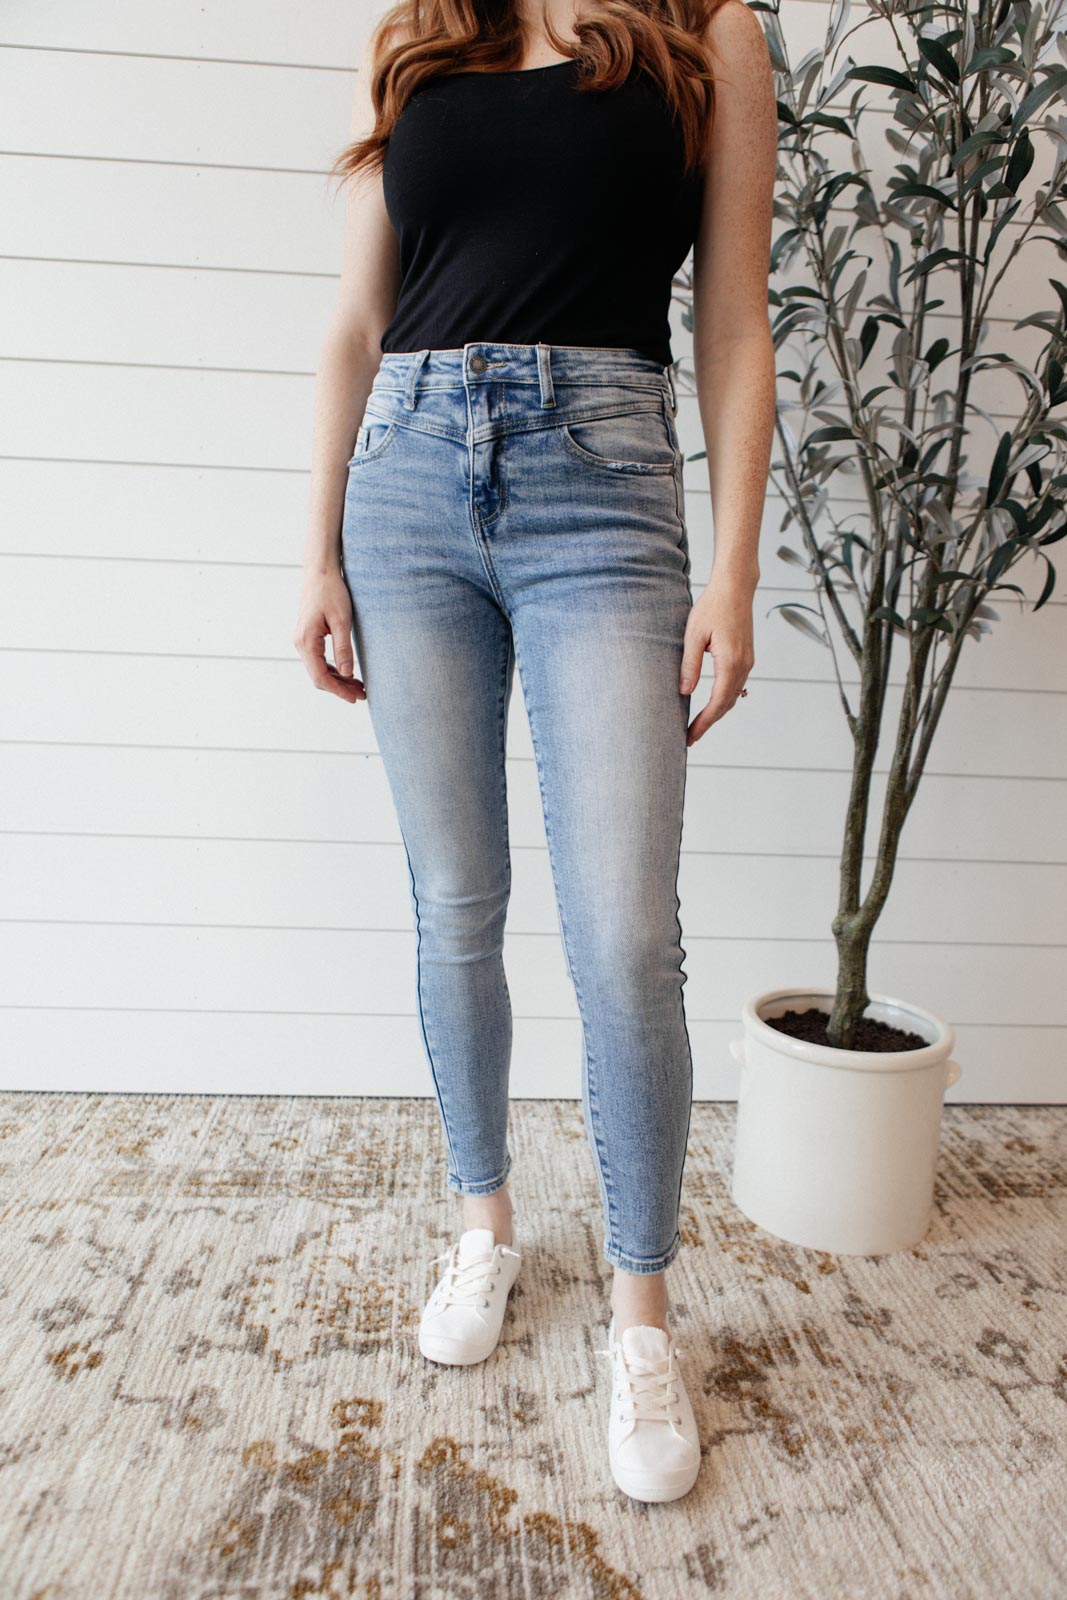 Feeling Blue Jeans (Online Exclusive) (Online Exclusive)